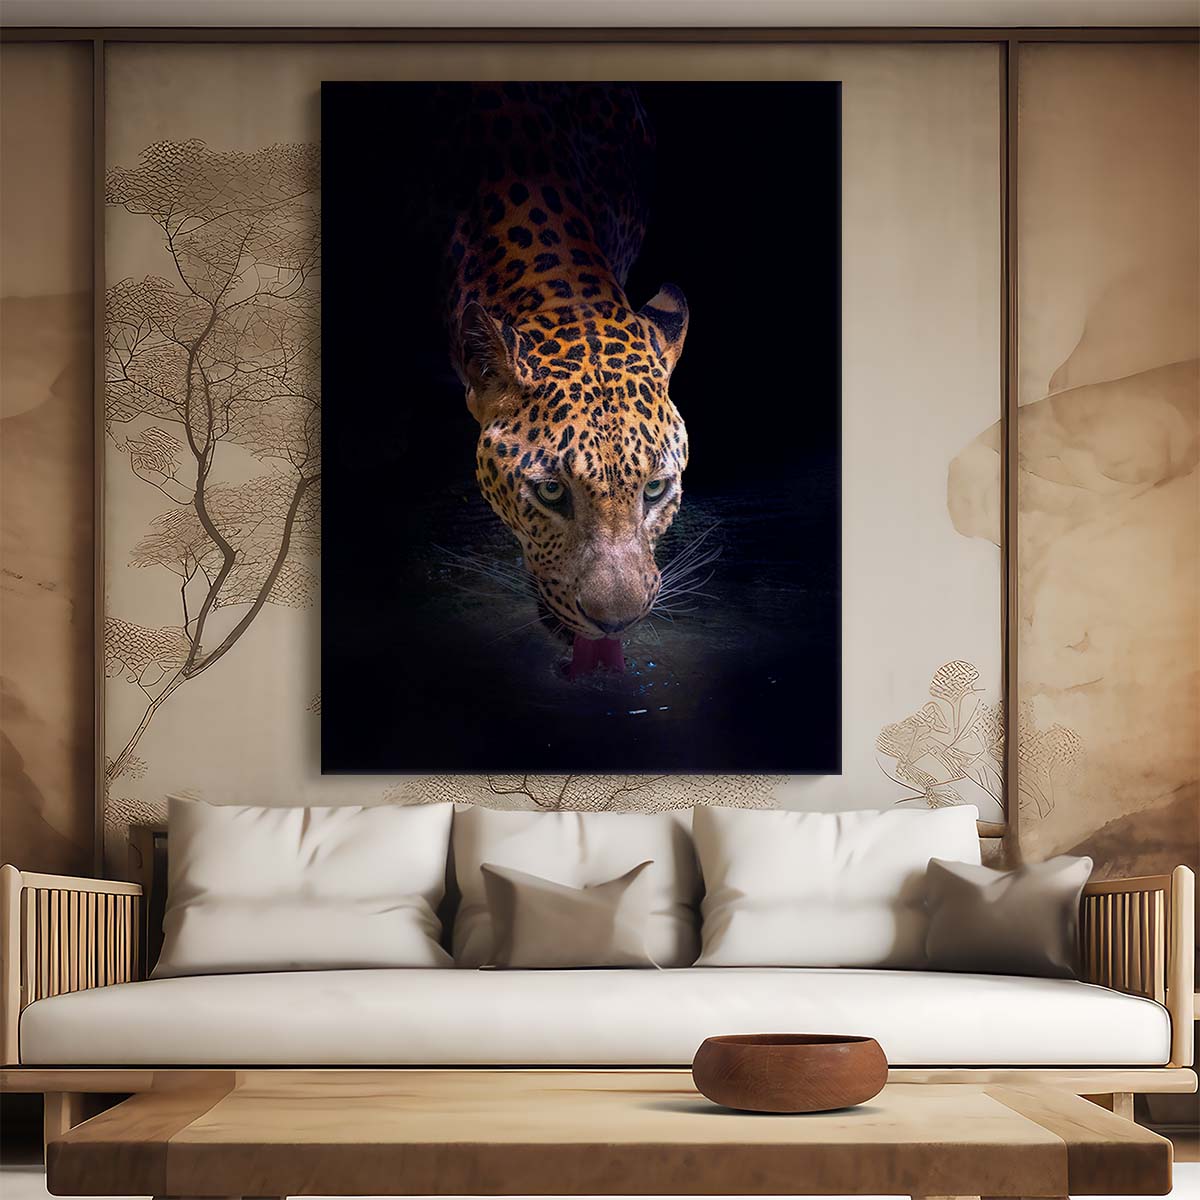 Thirsty Leopard at Waterhole - Dark, Wildlife Photography Art by Luxuriance Designs, made in USA